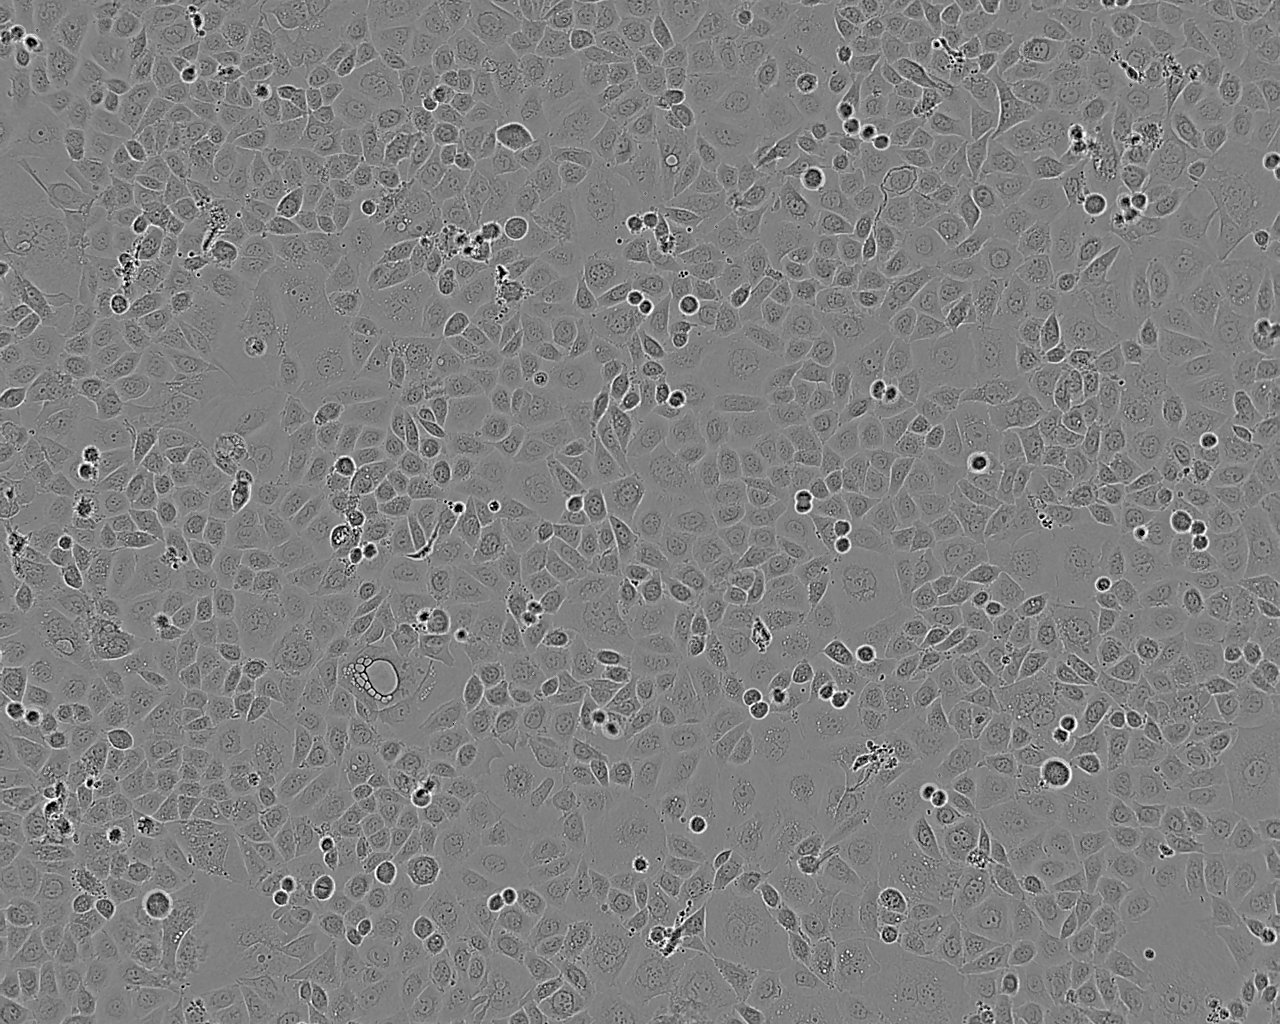 SK-N-AS epithelioid cells人脑神经母细胞瘤细胞系